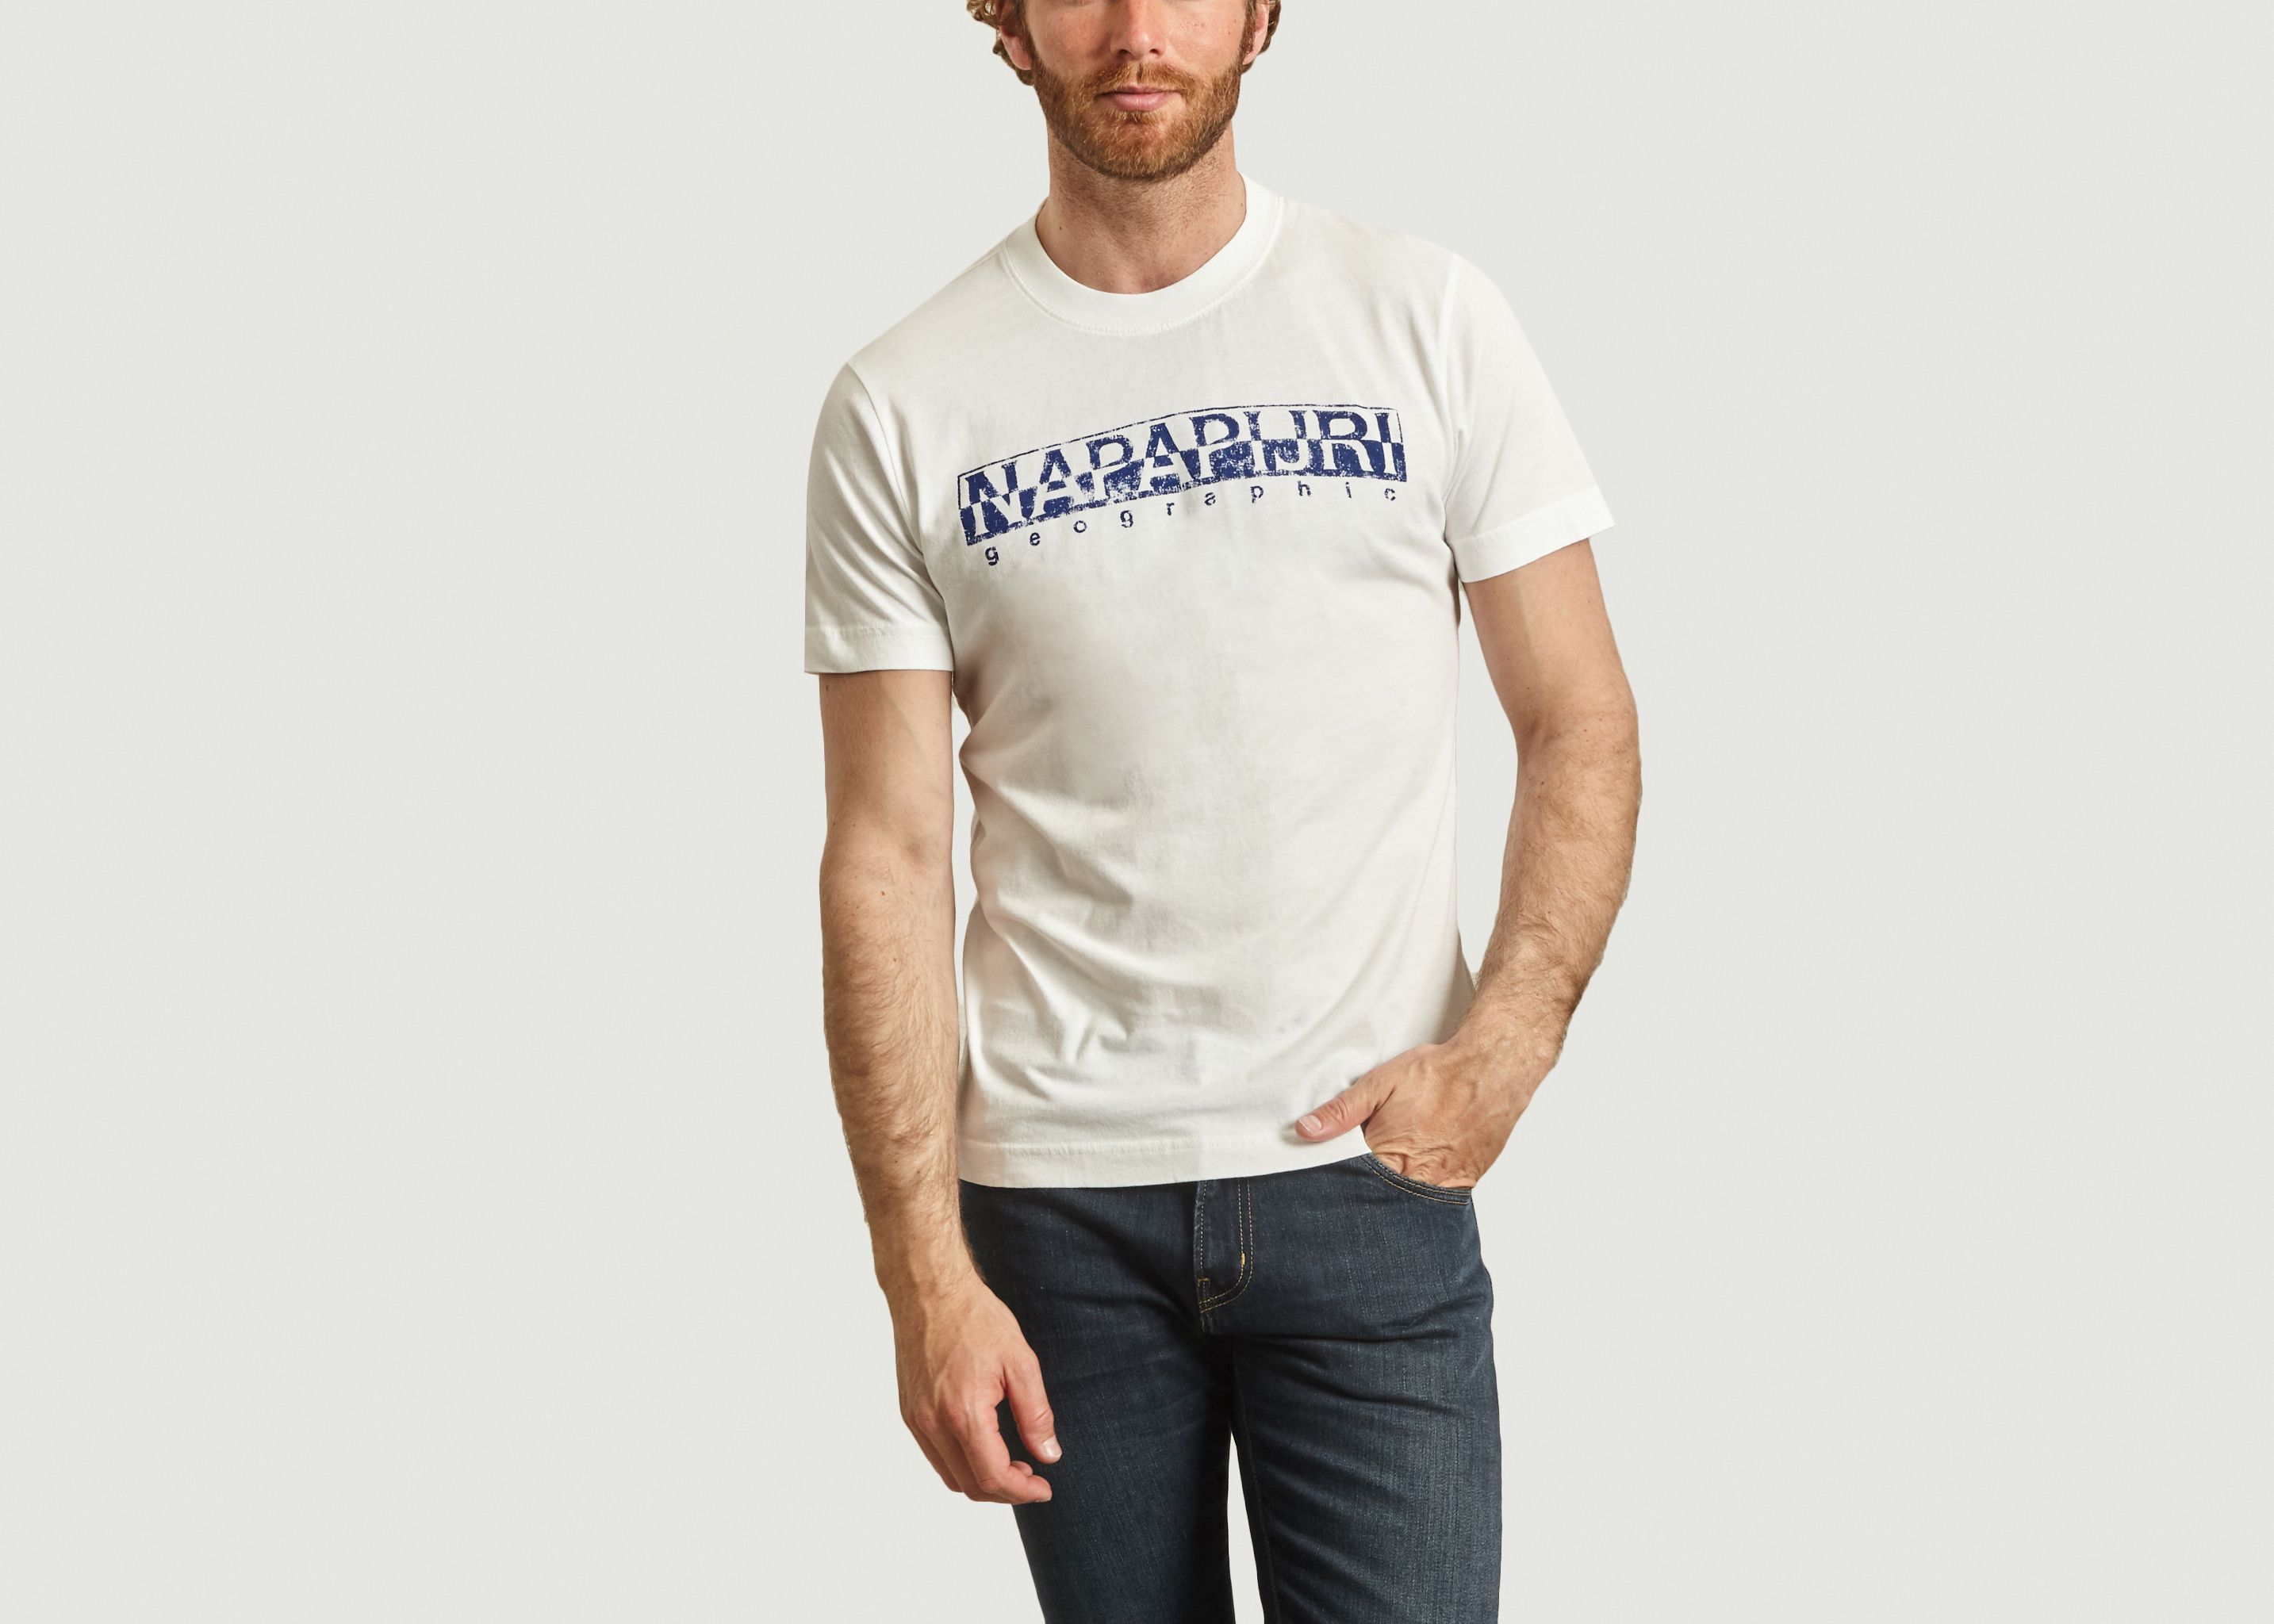 T-shirt Solanos - Napapijri